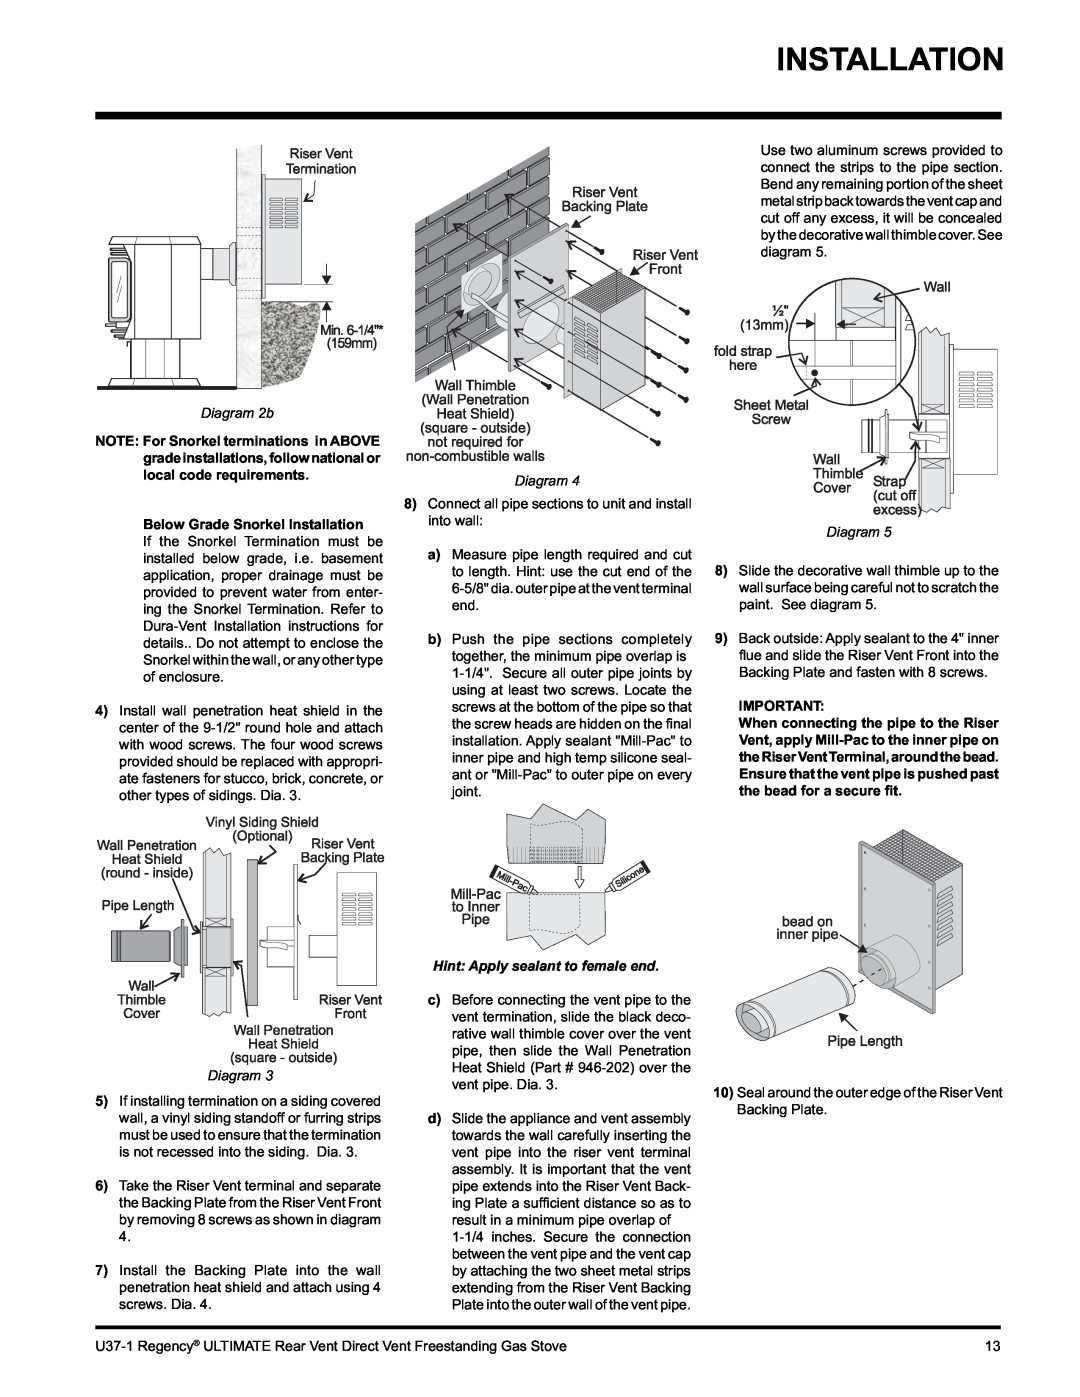 Regency U37-NG1, U37-LP1 installation manual Installation, Diagram 2b, Hint Apply sealant to female end 